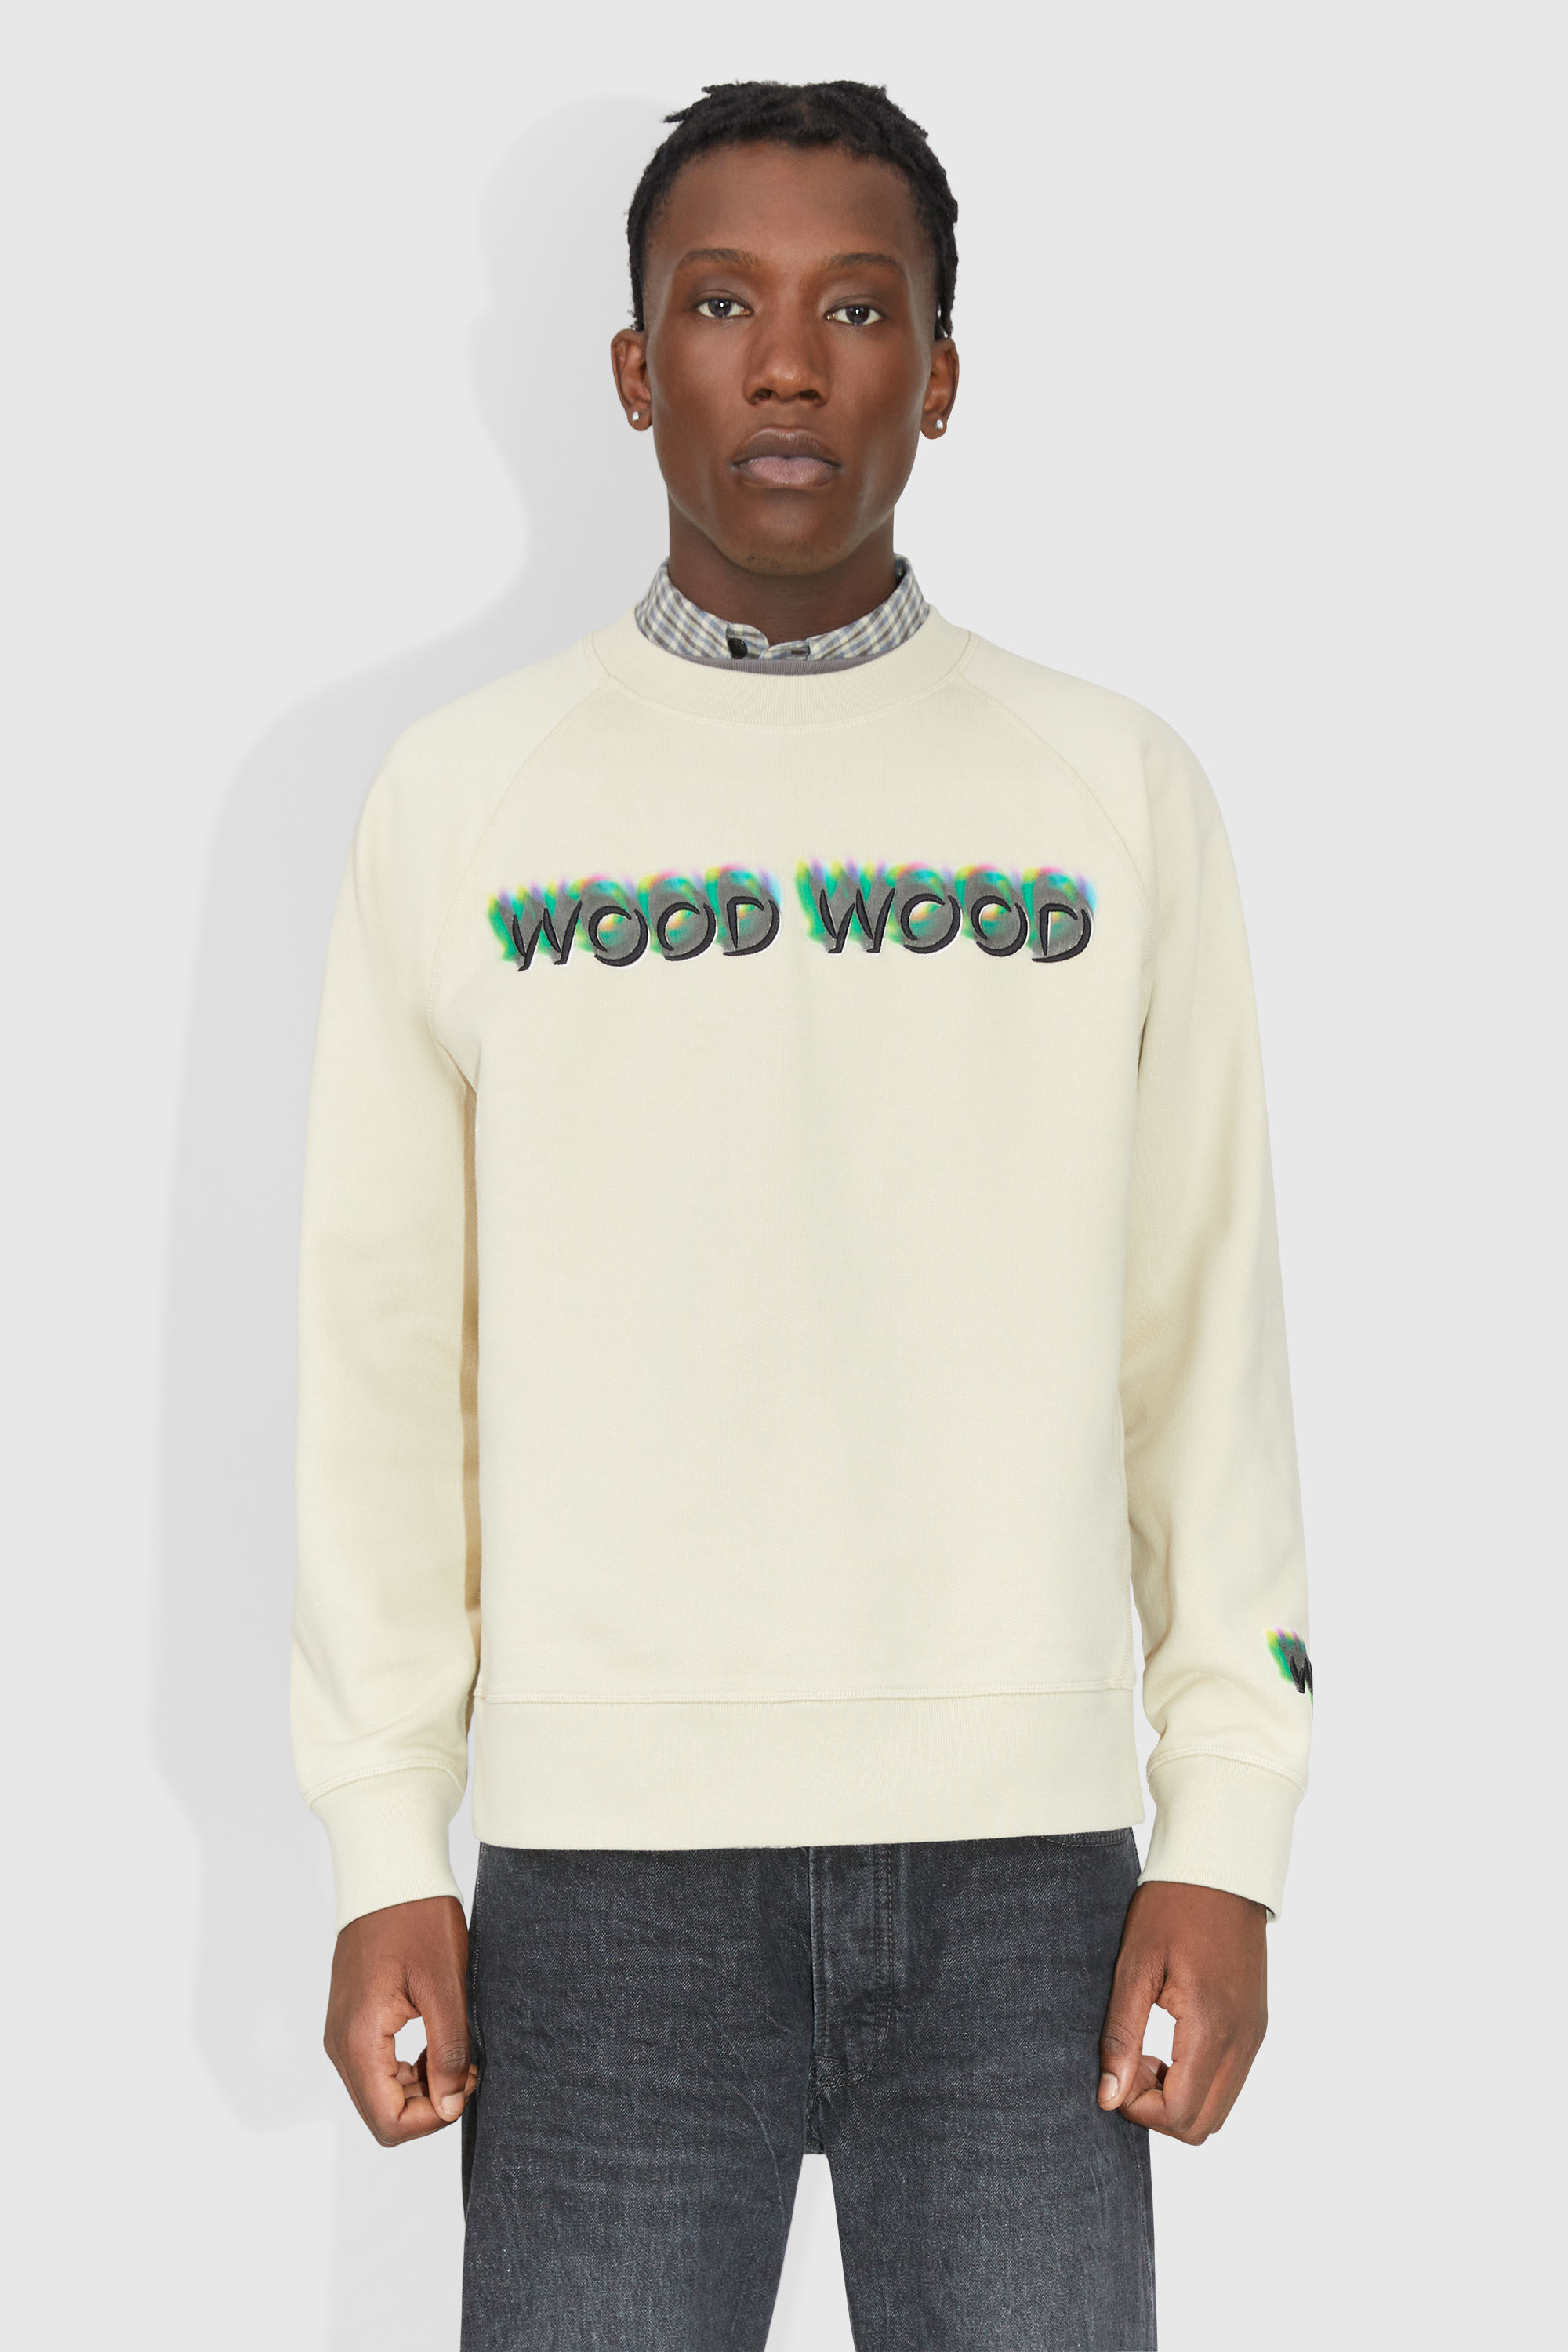 Double A by Wood Wood Ian hoodie Emerald green | WoodWood.com